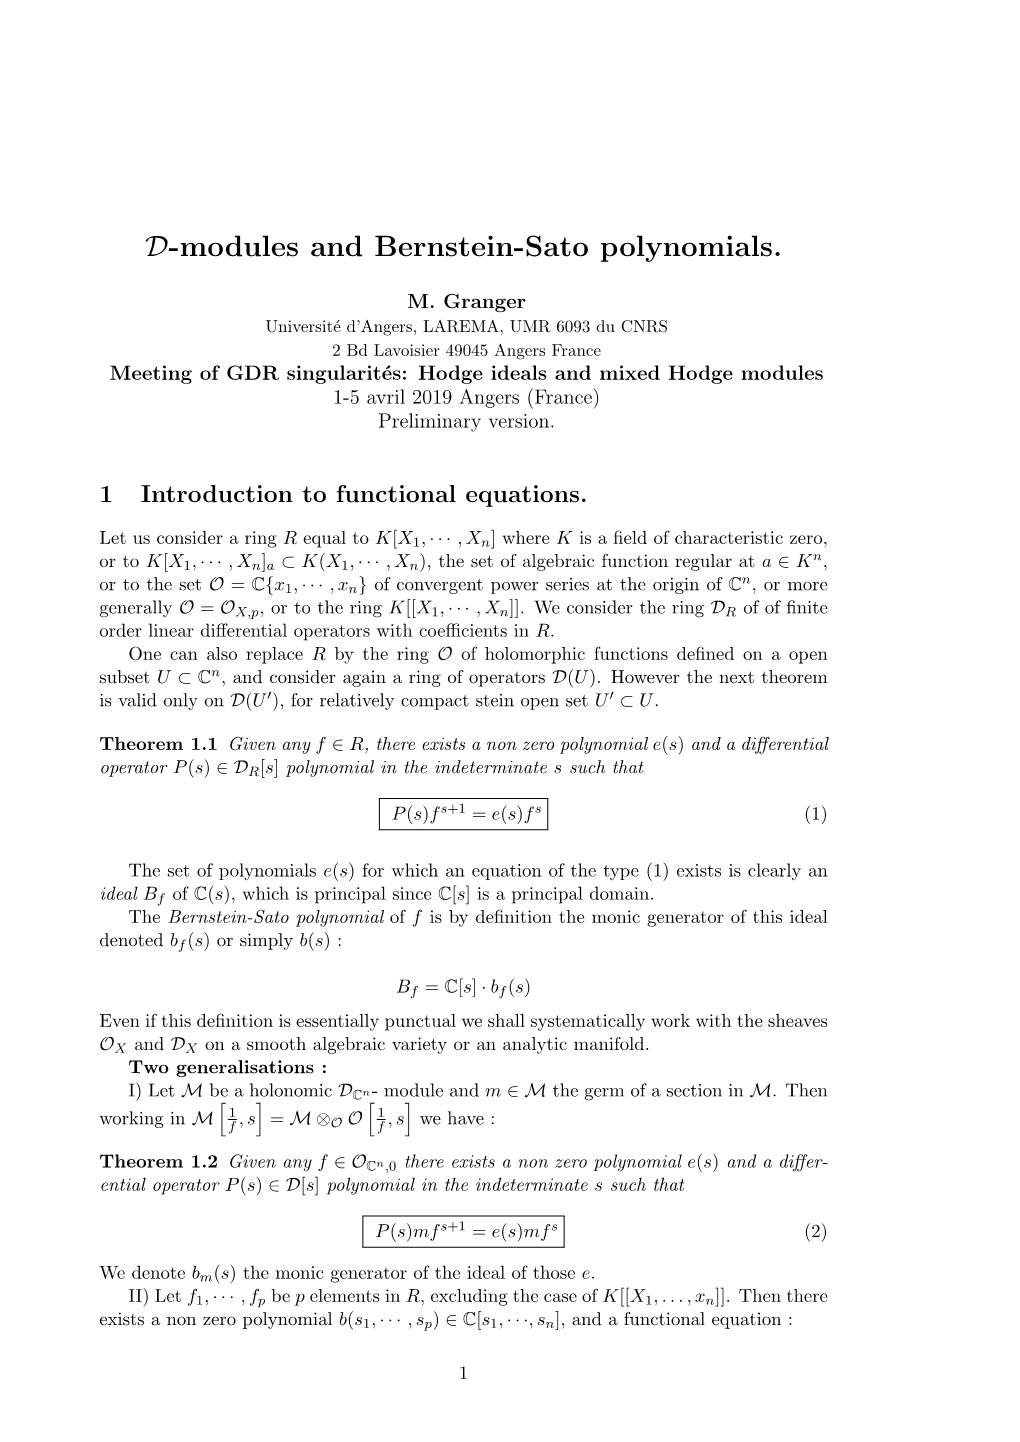 D-Modules and Bernstein-Sato Polynomials